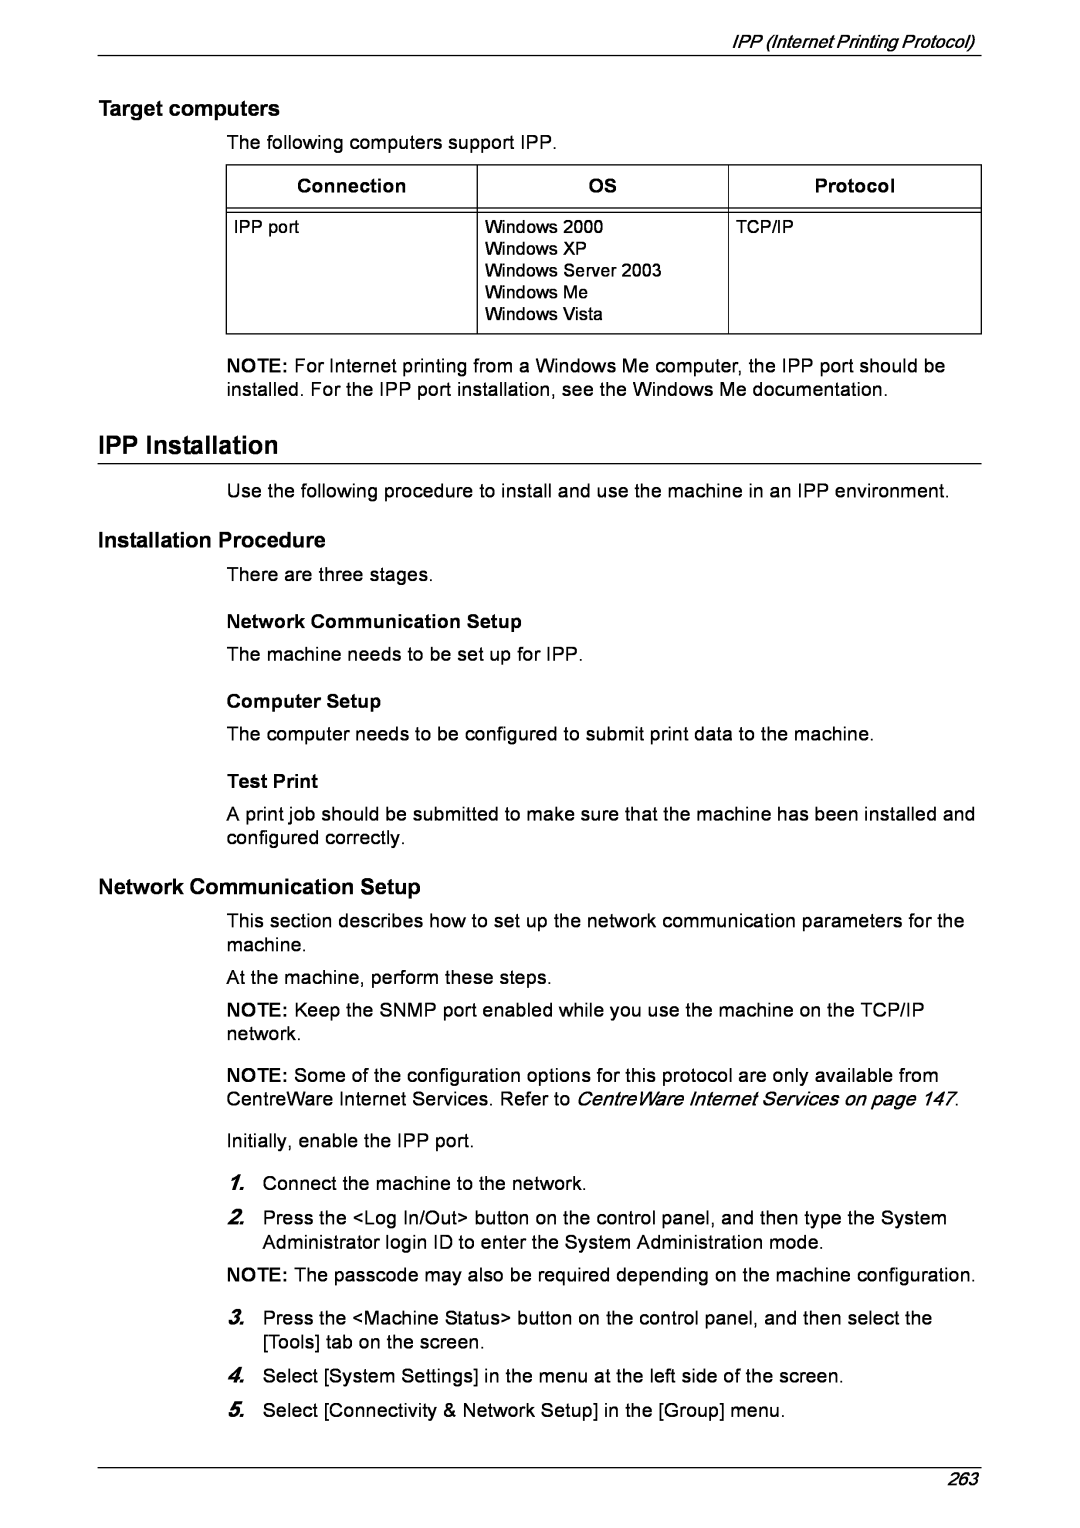 Xerox 5222 manual IPP Installation, Connection, Protocol, Network Communication Setup, Computer Setup, Test Print 